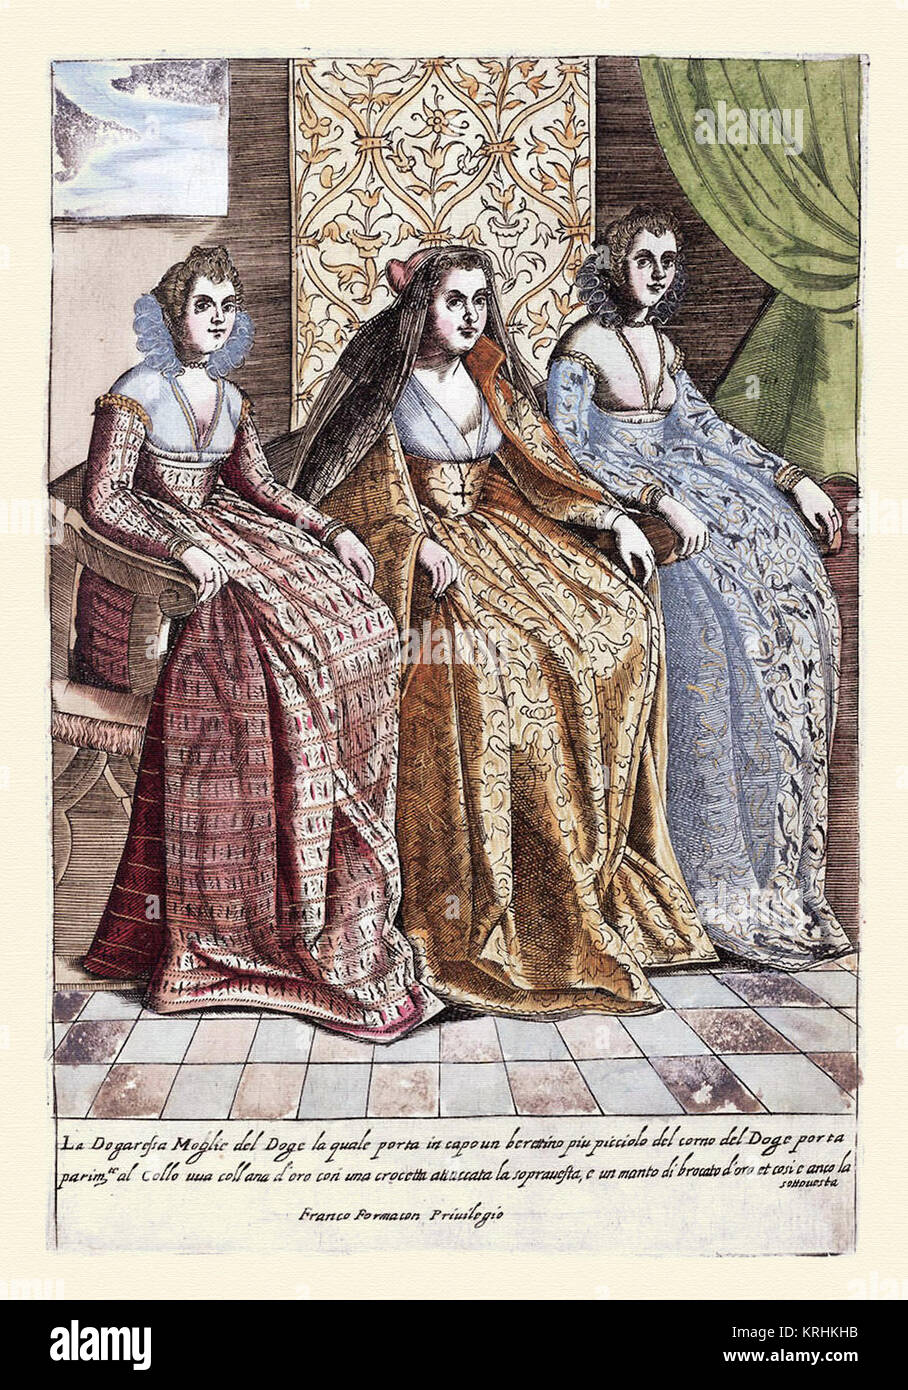 Esposa del Dogo de Venecia & acompañantes sus-Habiti d'hvomeni et donne venetiane 1609 Banque D'Images